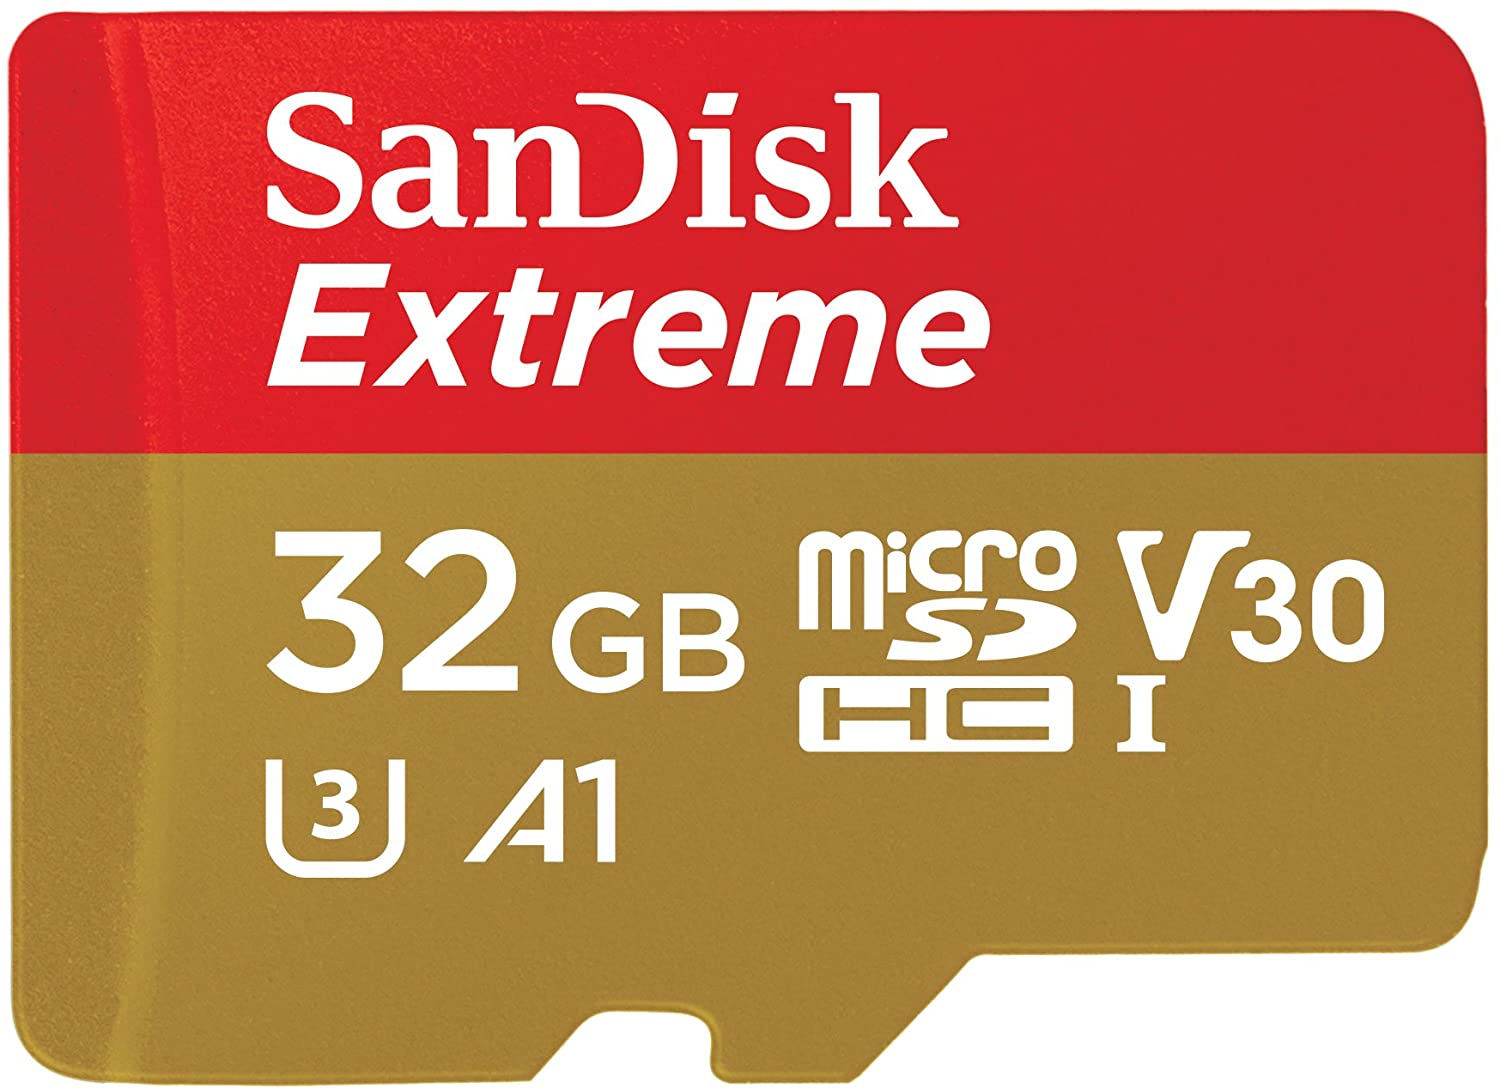 32GB MicroSD Card - U3